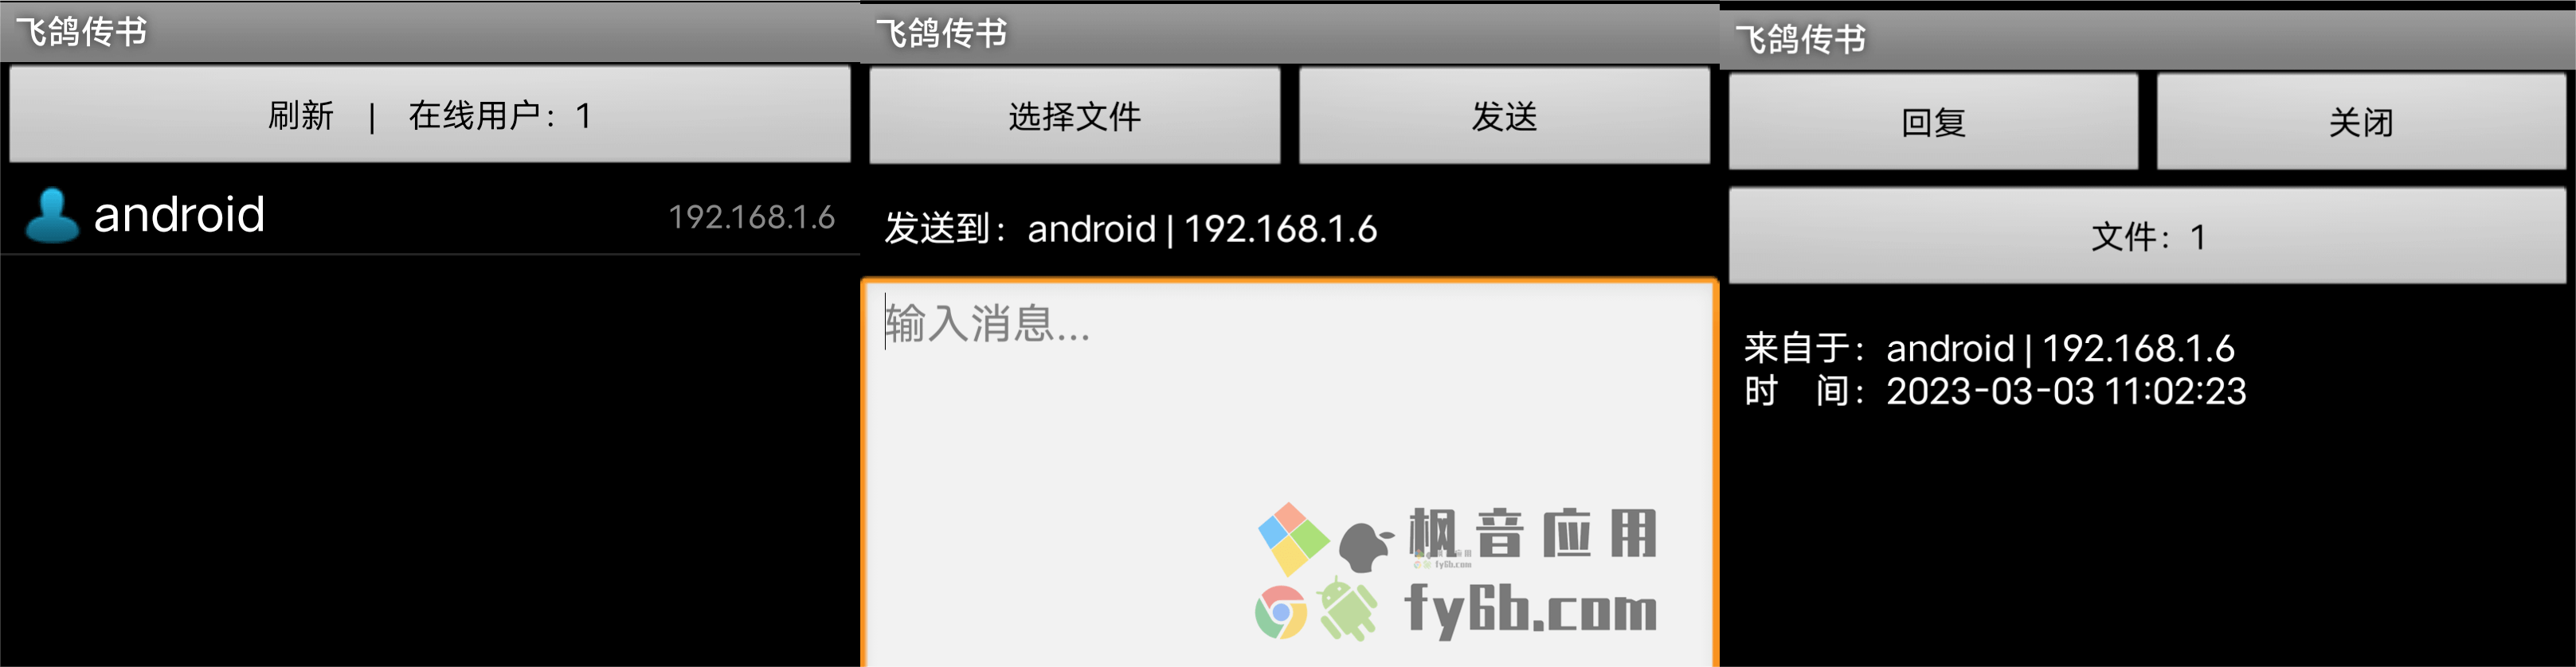 Android+Windows IP Messenger 飞鸽传书_v2007 绿色版